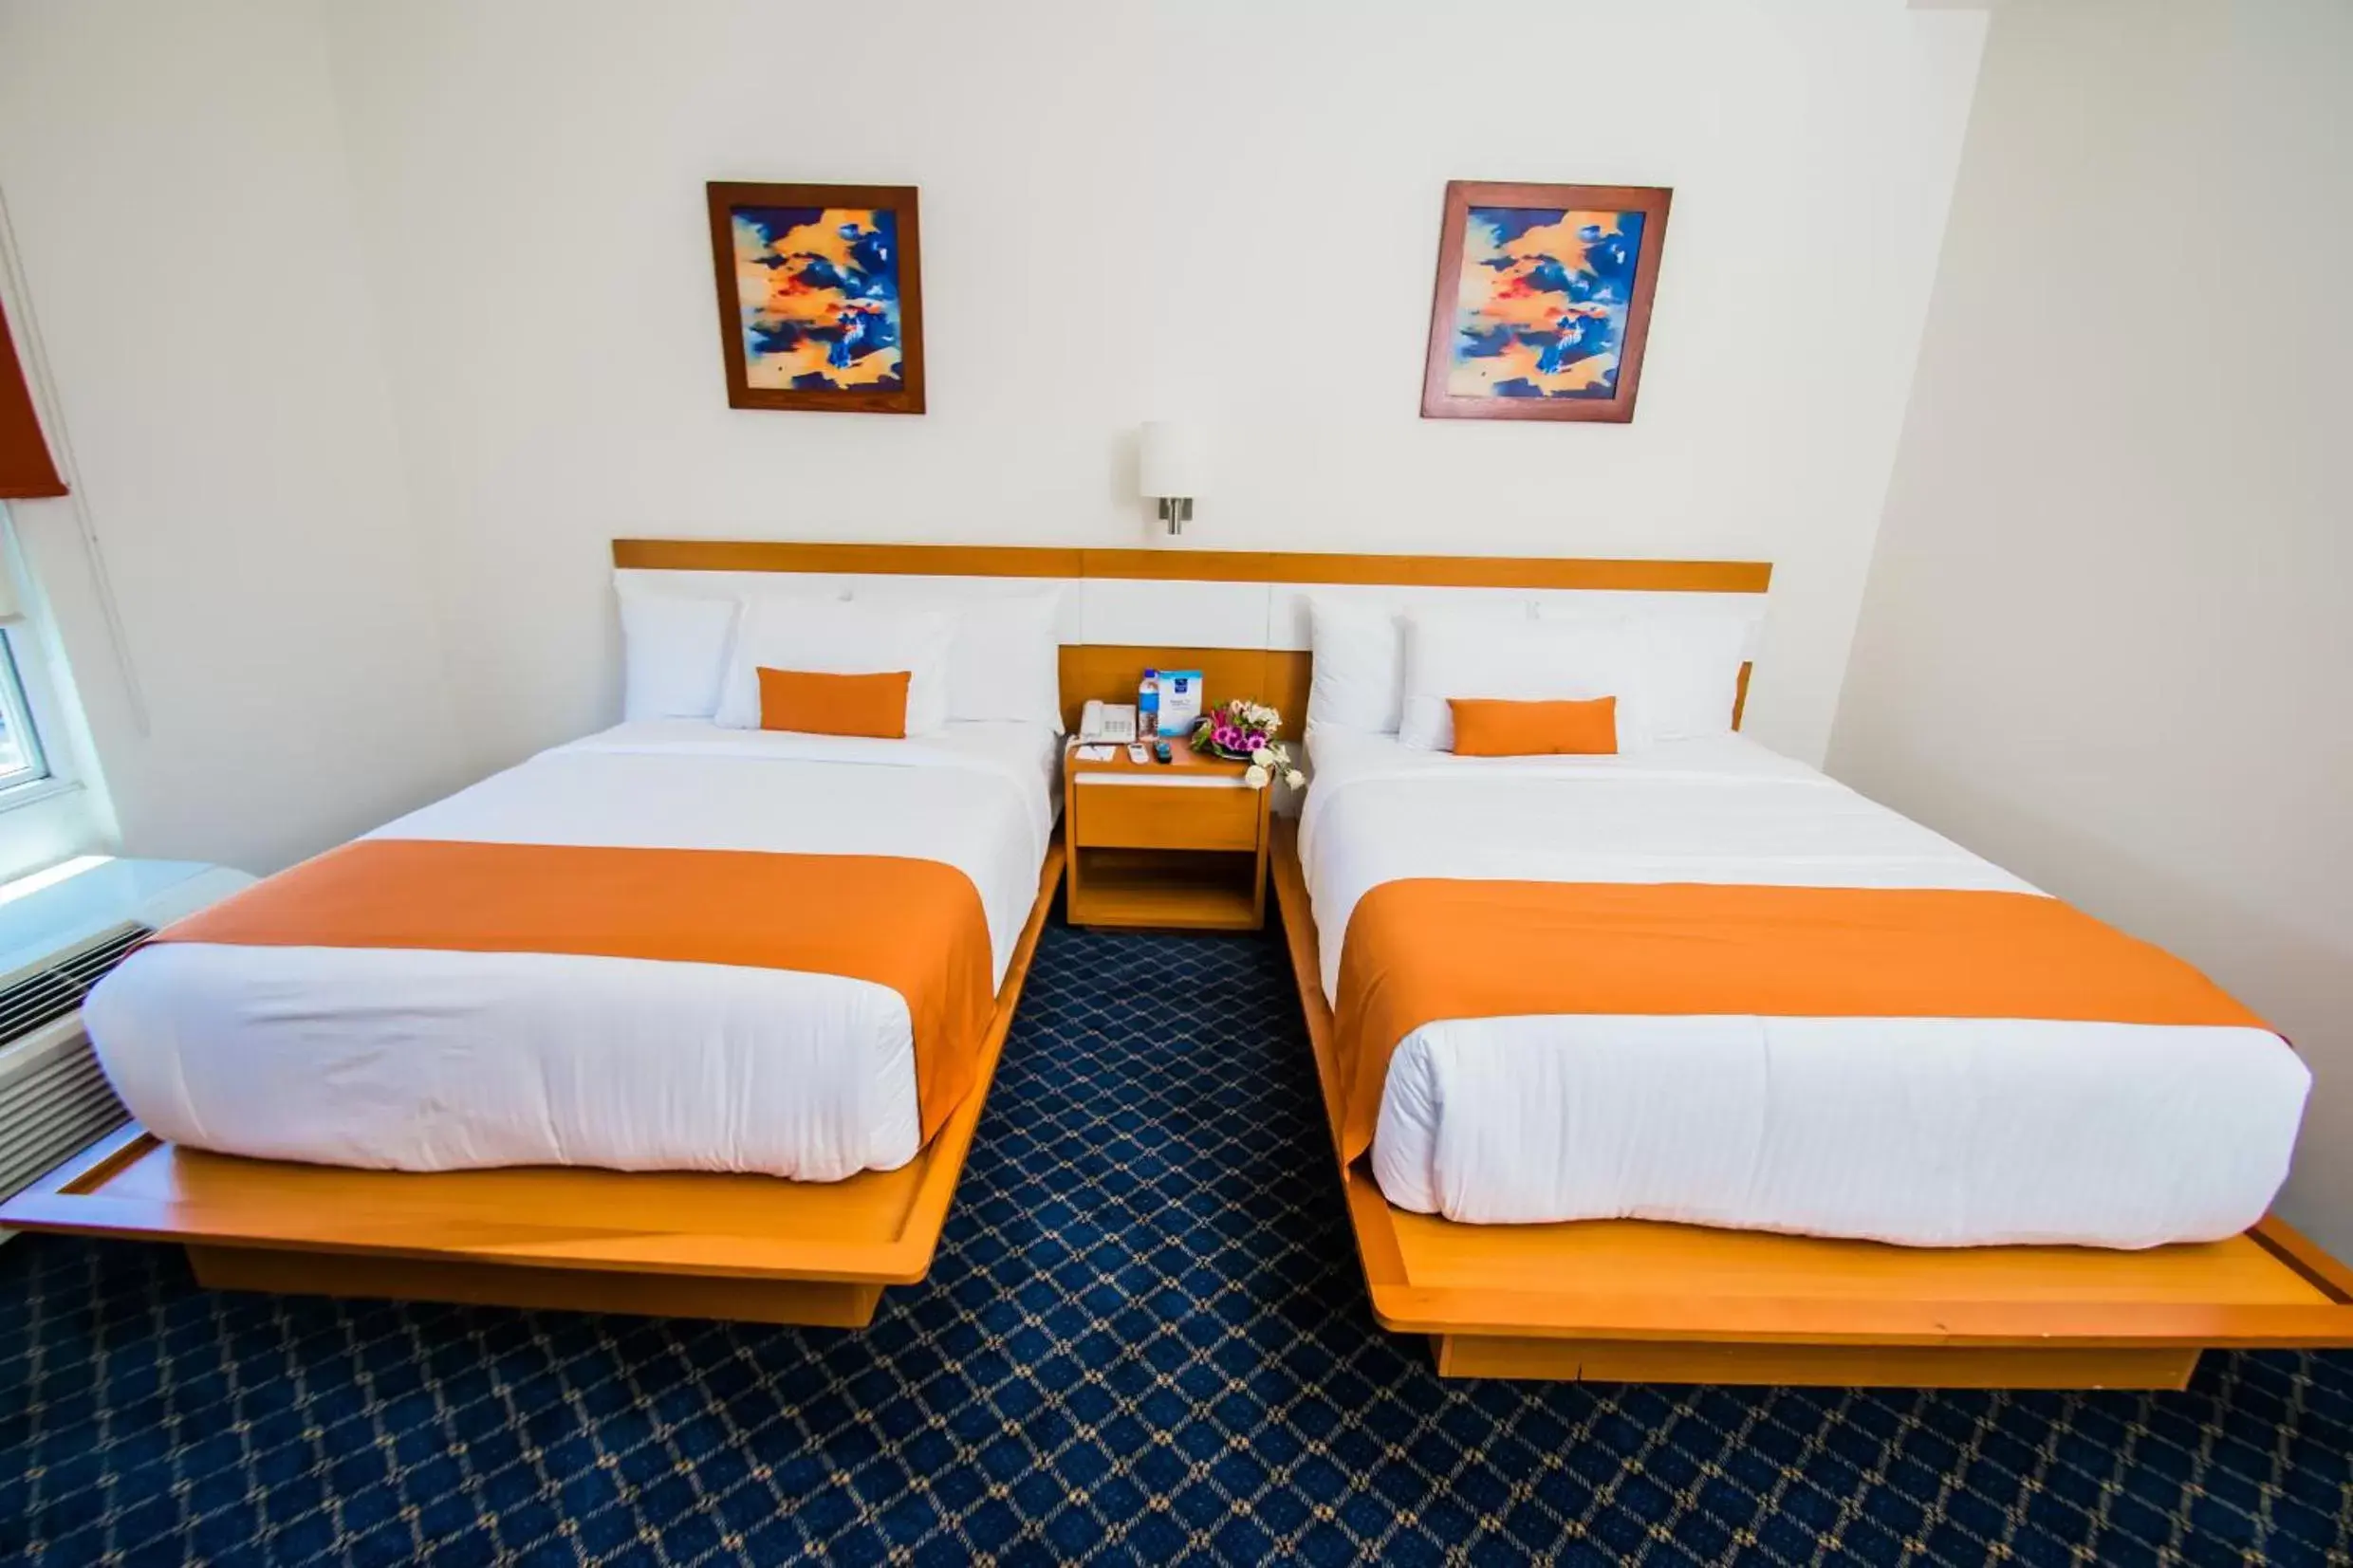 Bed, Room Photo in Sleep Inn Monclova